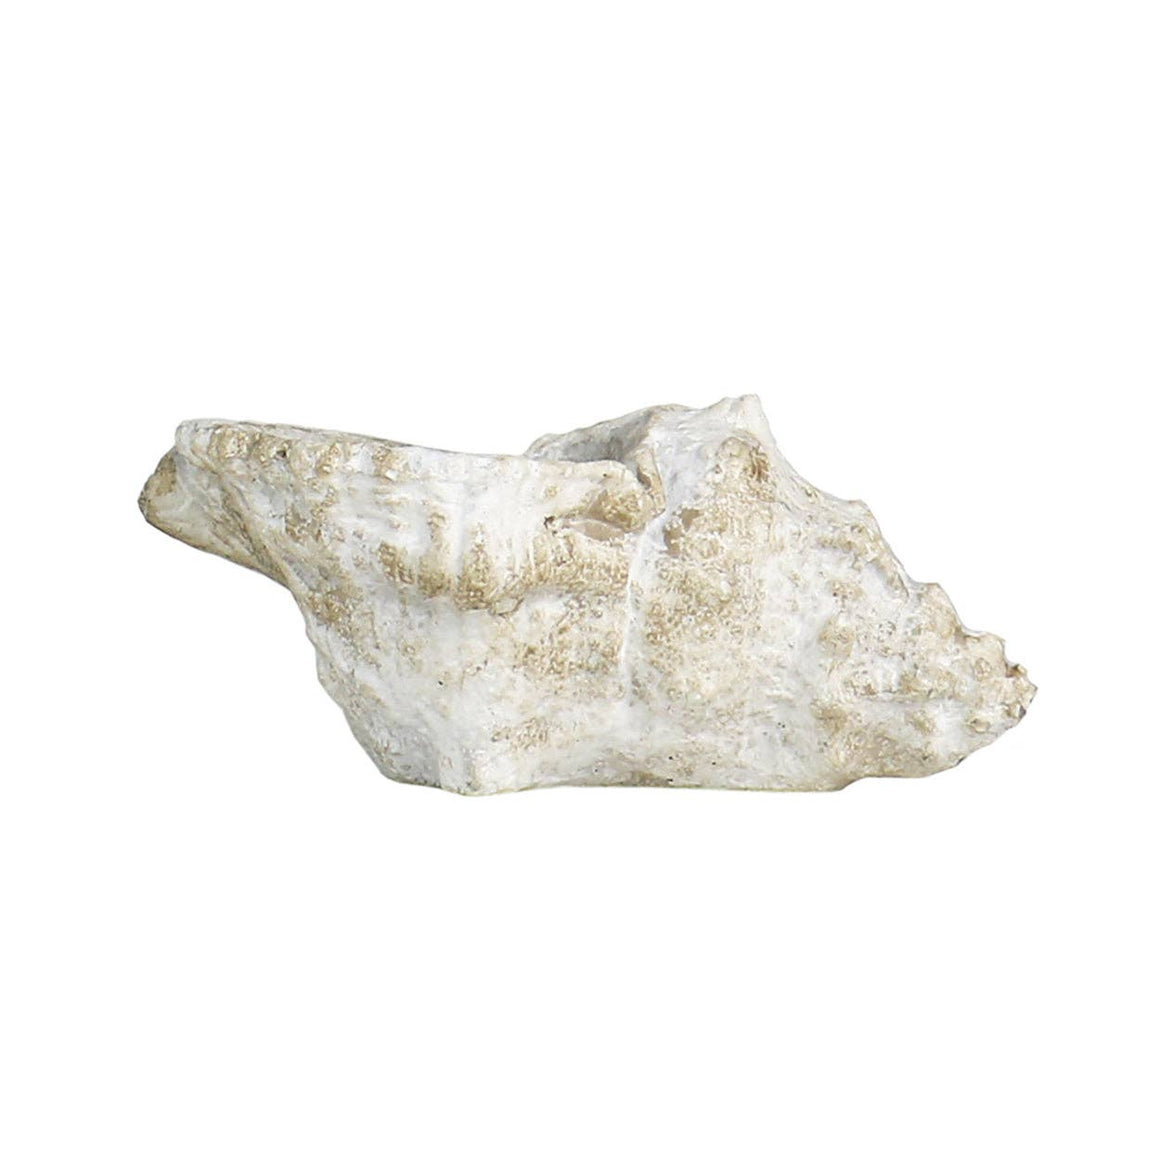 Cast Concrete Conch Shell